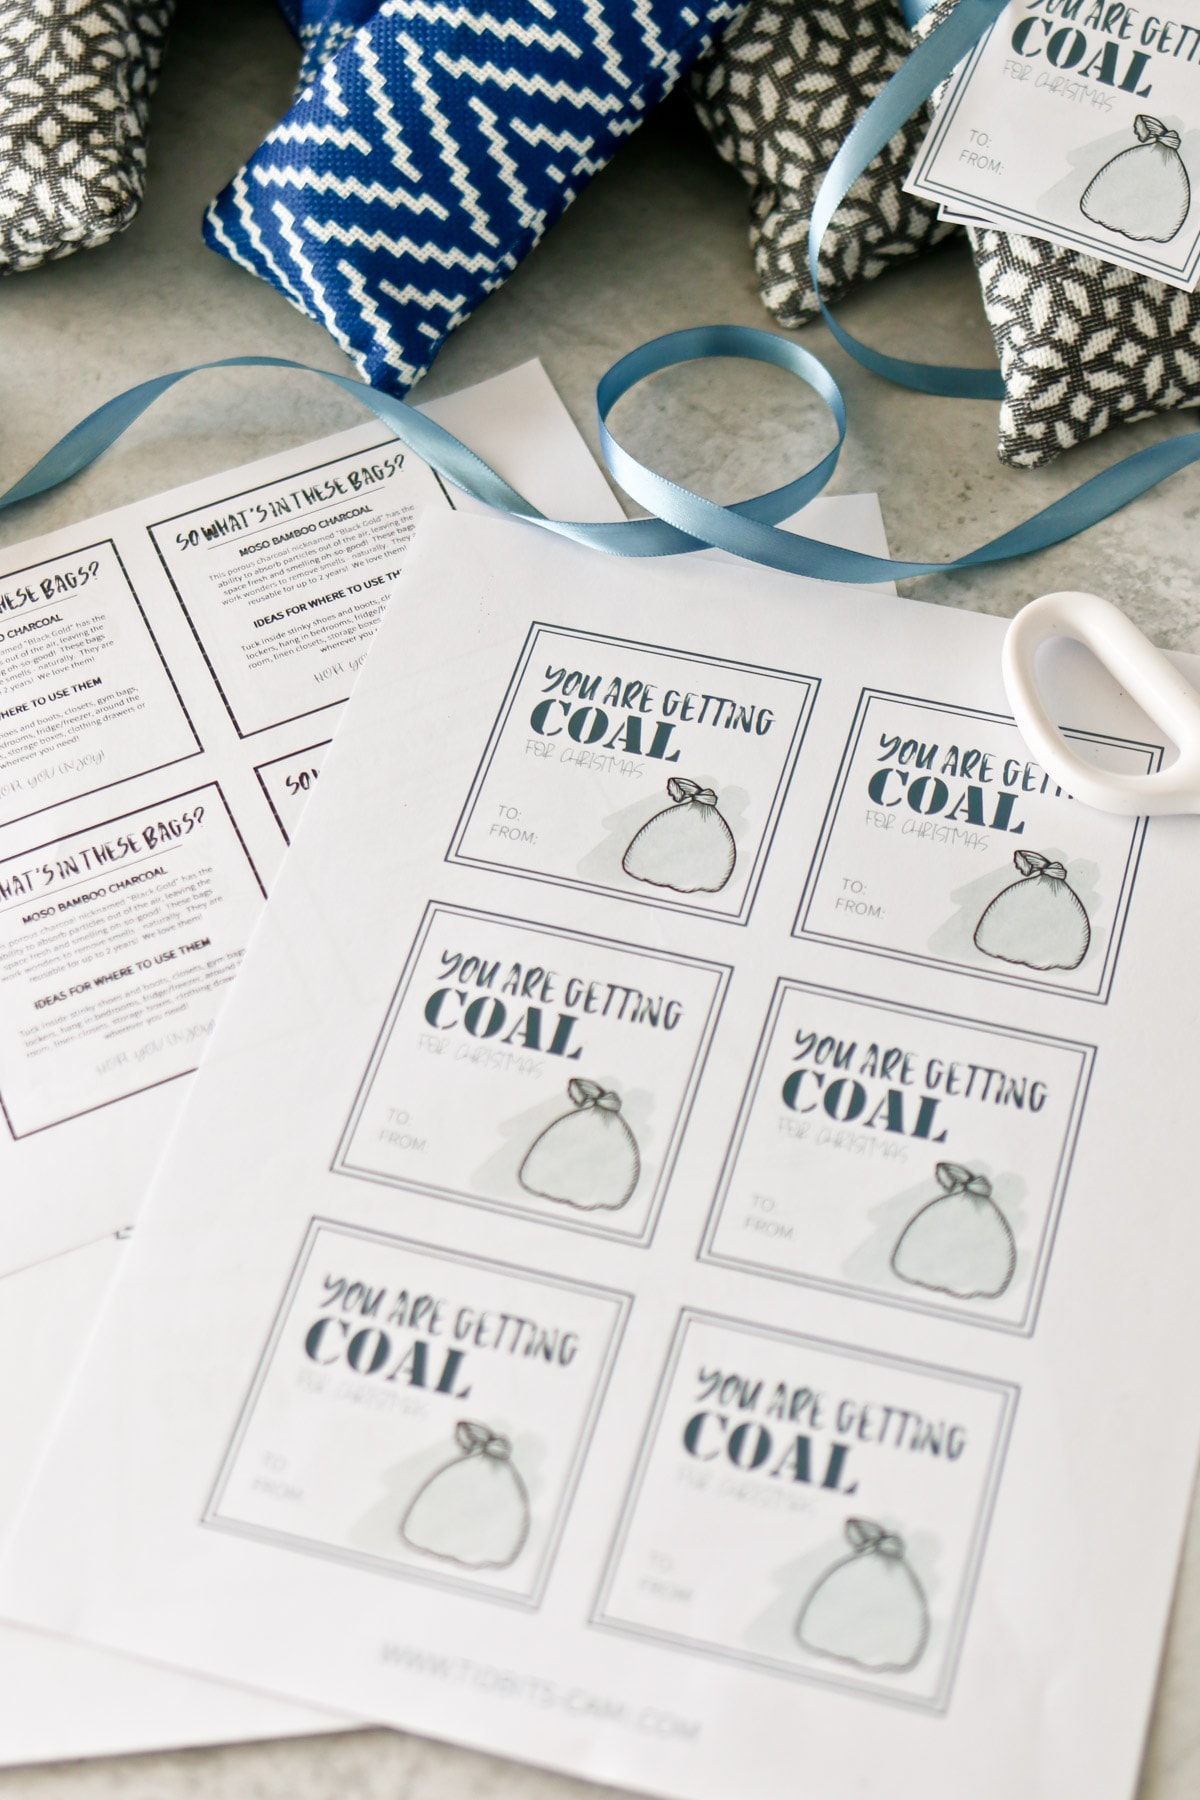 You are getting coal for Christmas, FREE printable gift tags.